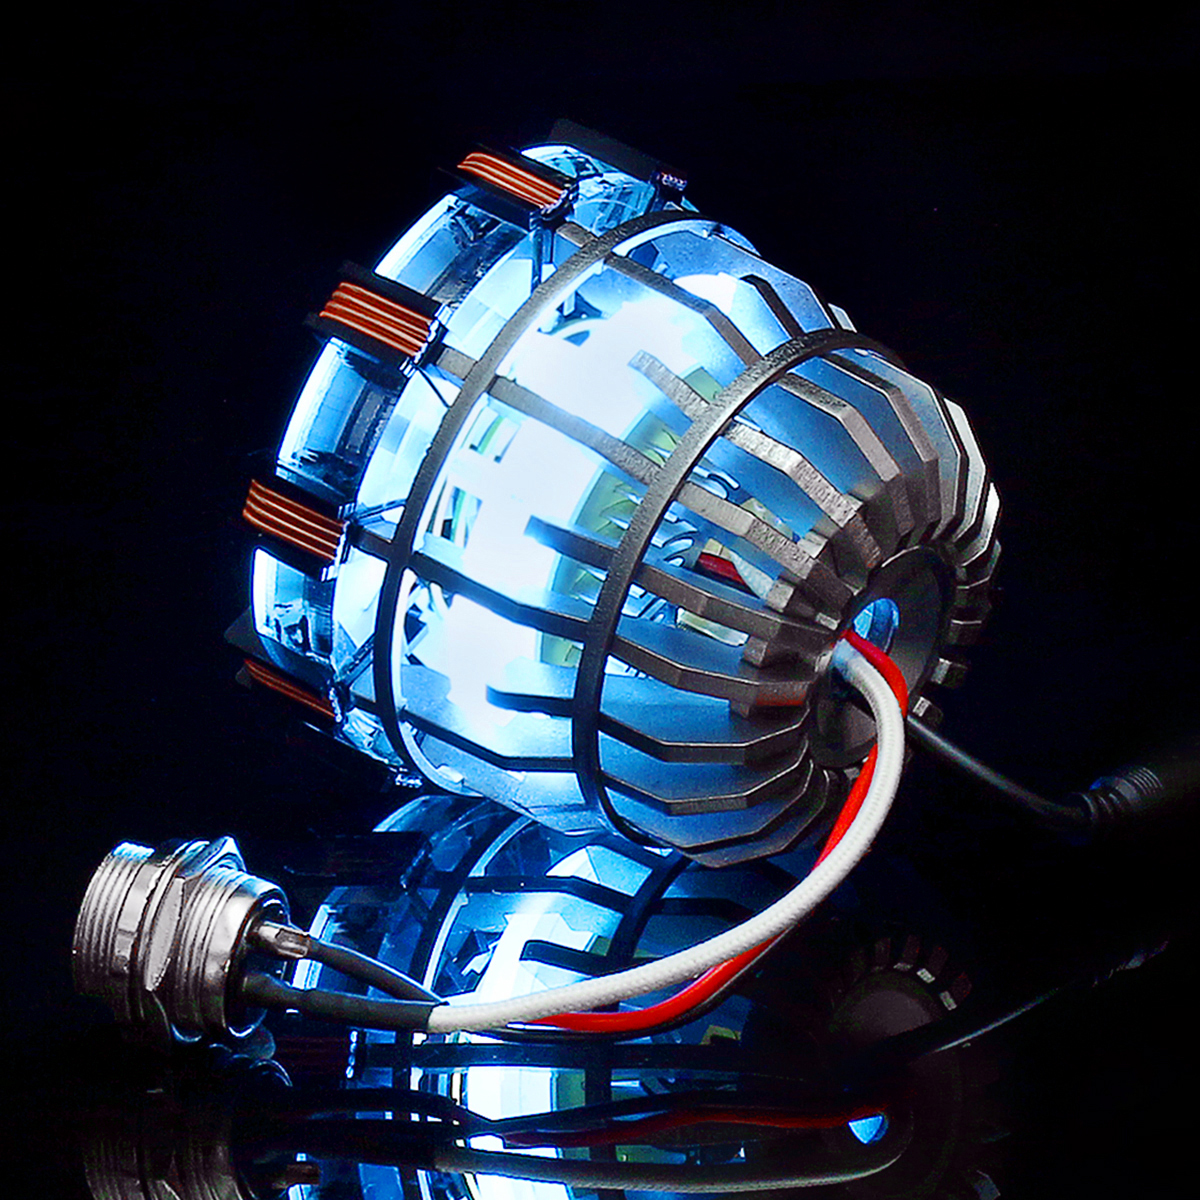 MK2 Tony DIY Arc Reactor Lamp Stainless Steel Kit Illuminant LED Flash Light Set 108